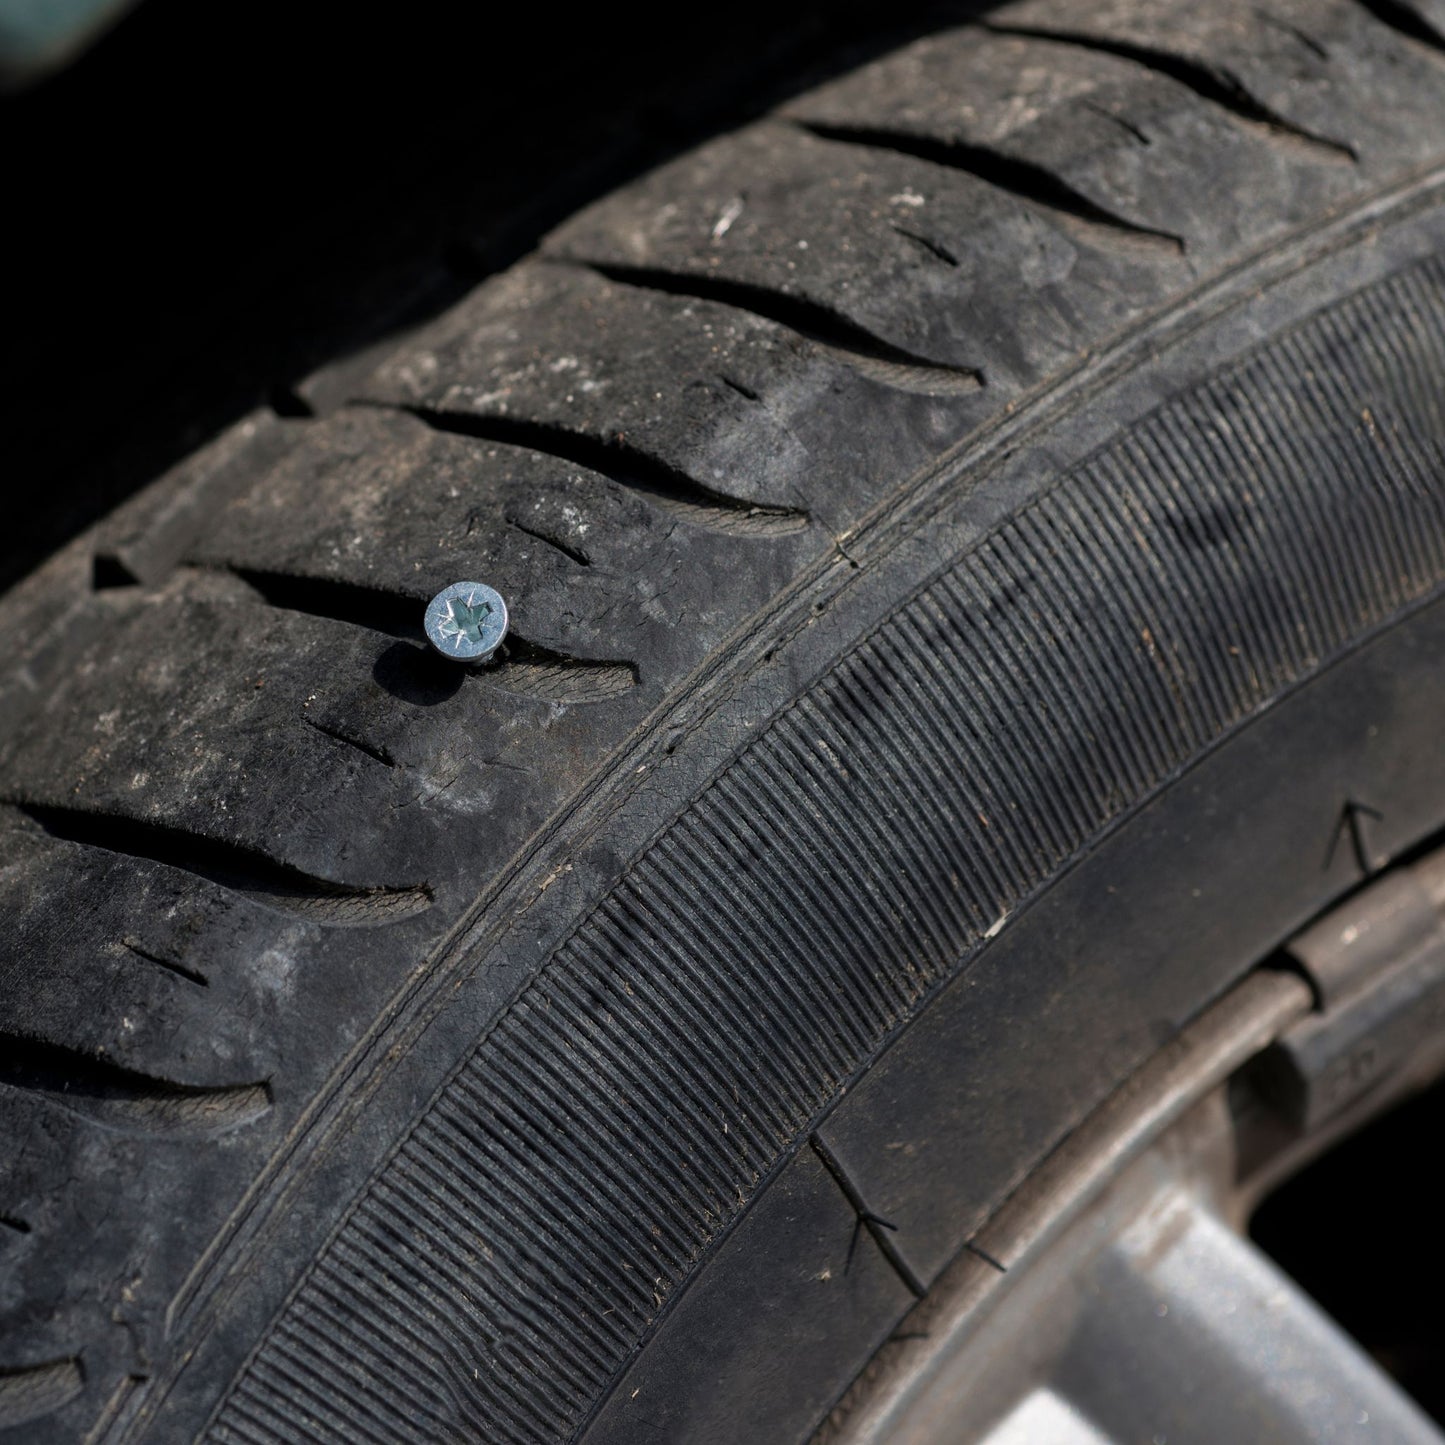 Flat tire service Ajax, Ontario (flat tire repair & flat tire change).